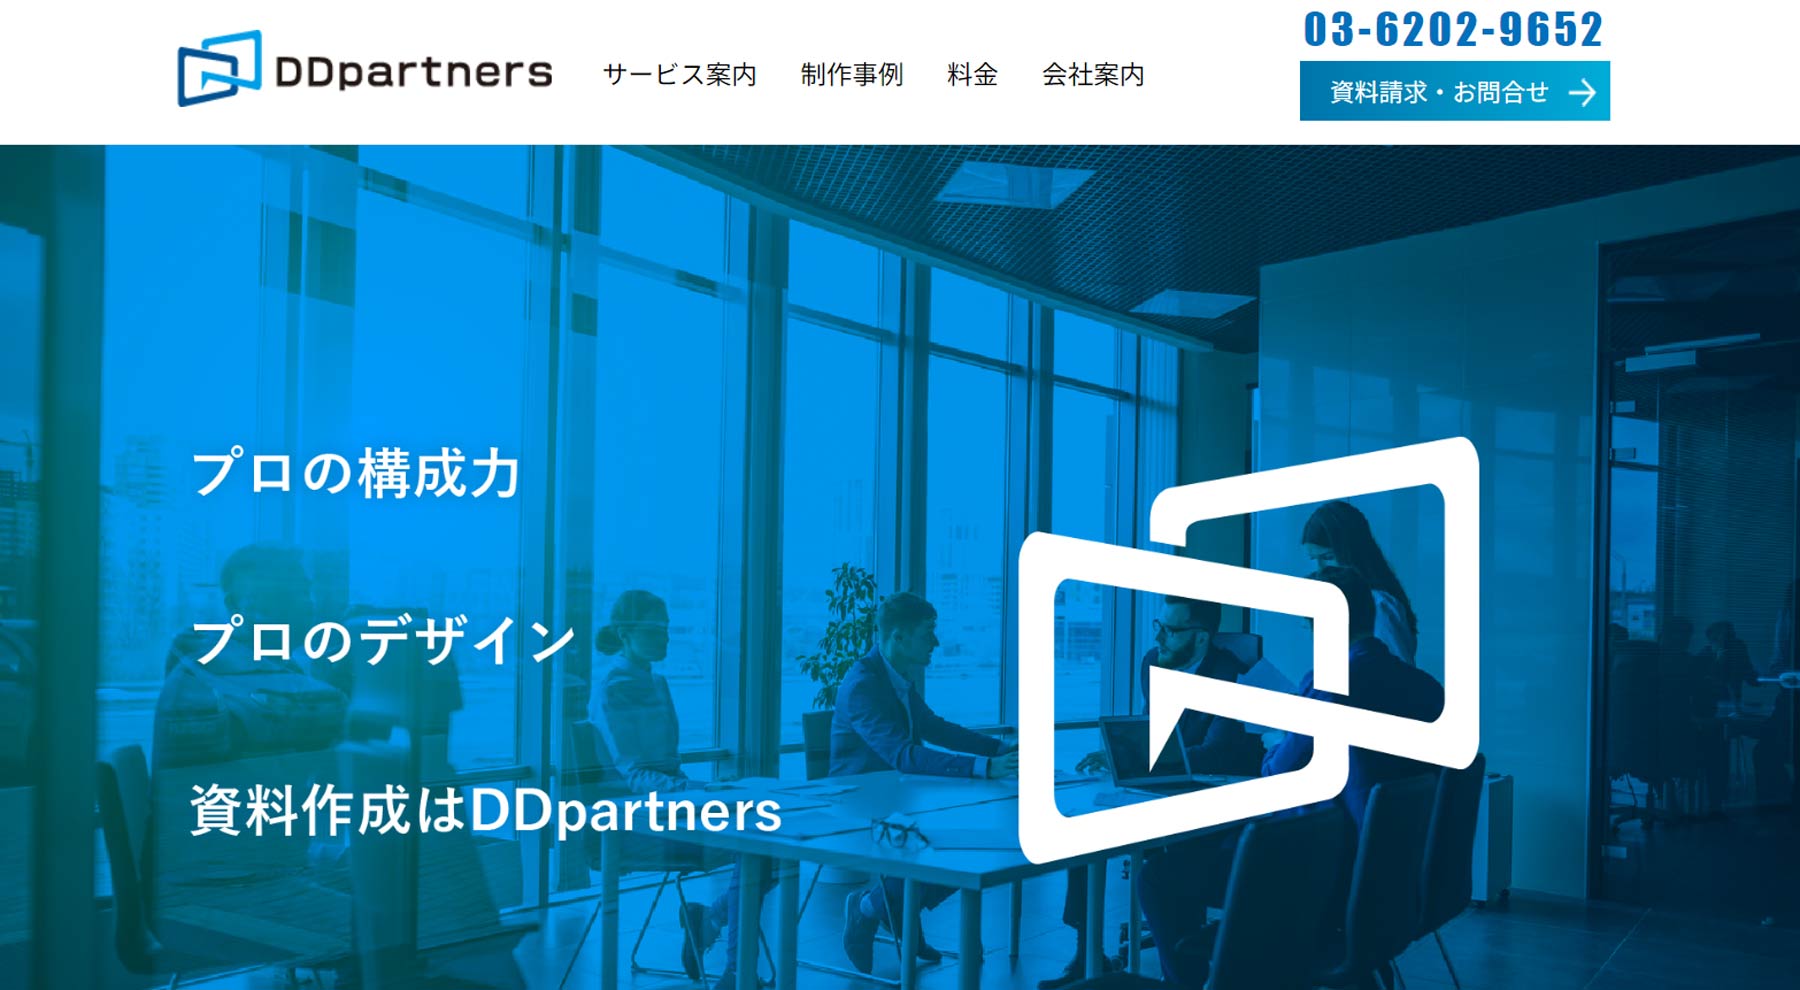 DDpartners公式Webサイト